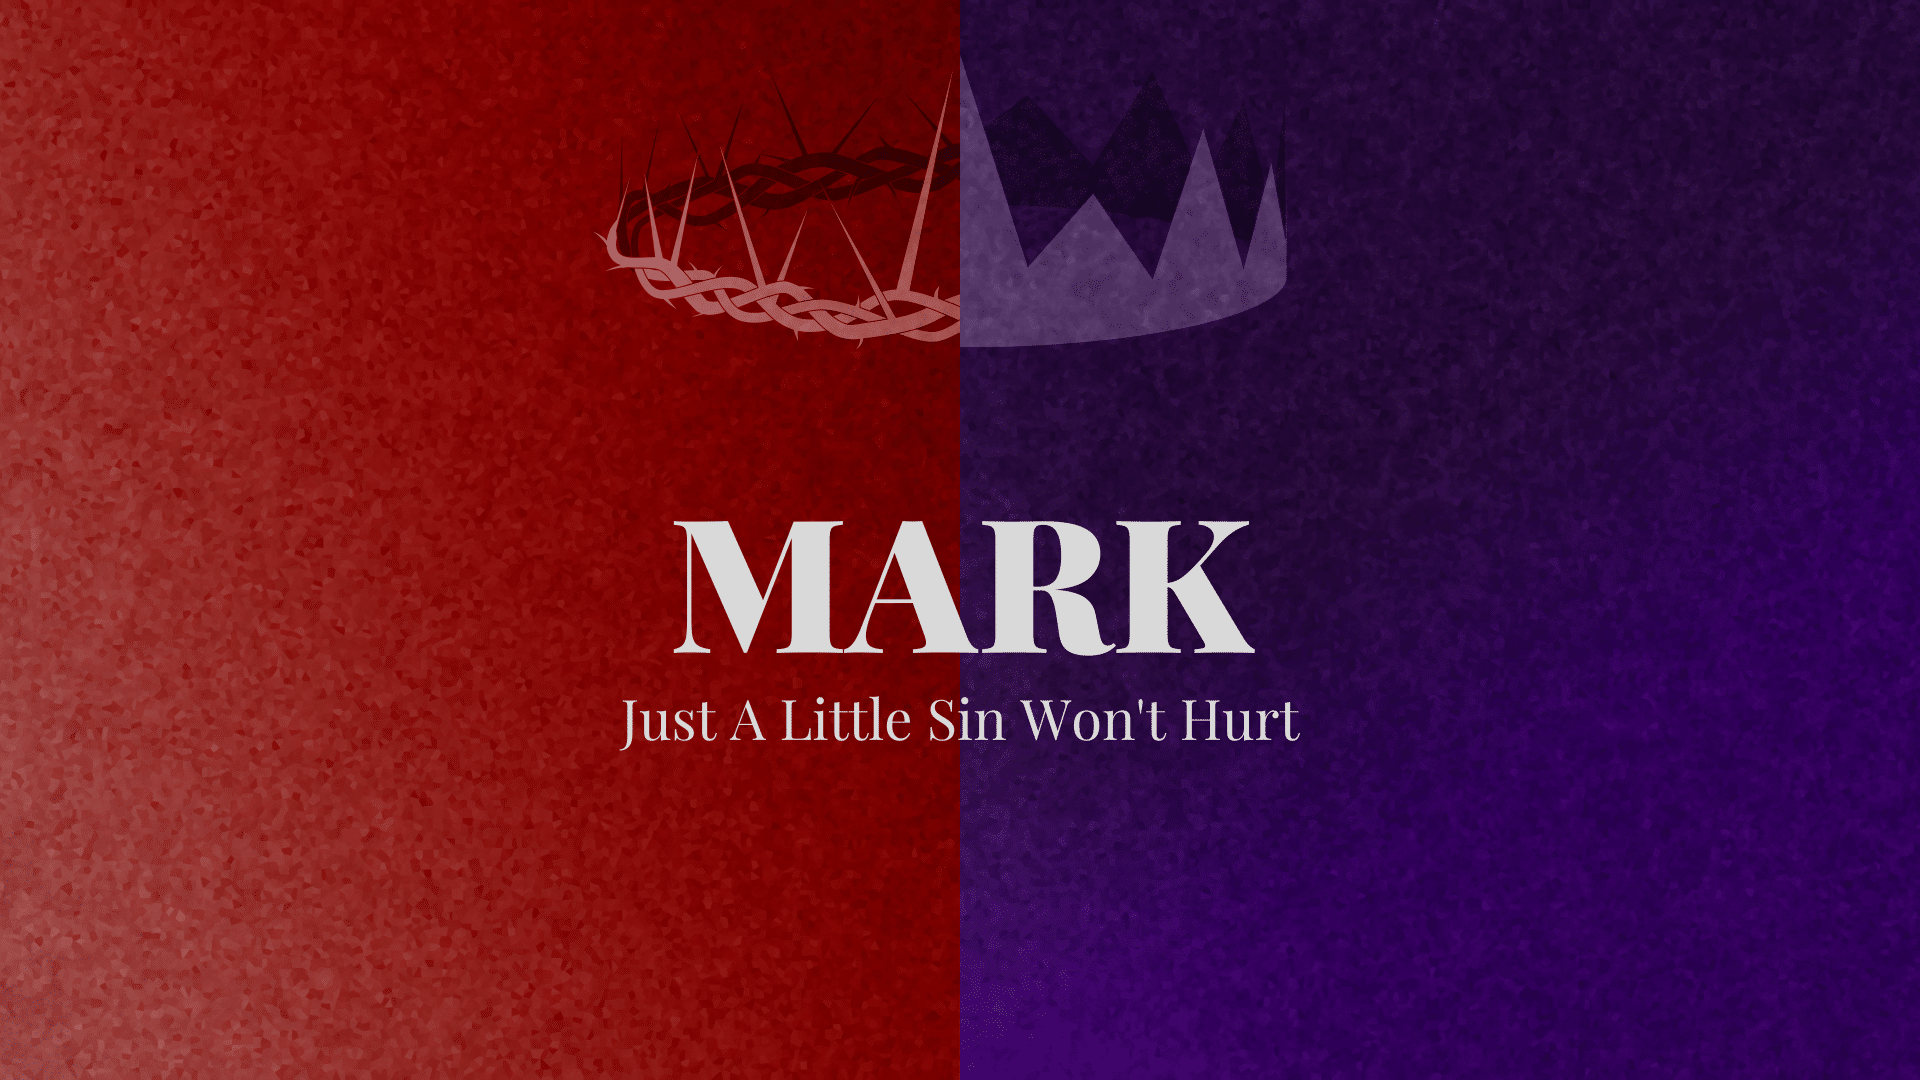 Mark: Just A Little Sin Won’t Hurt